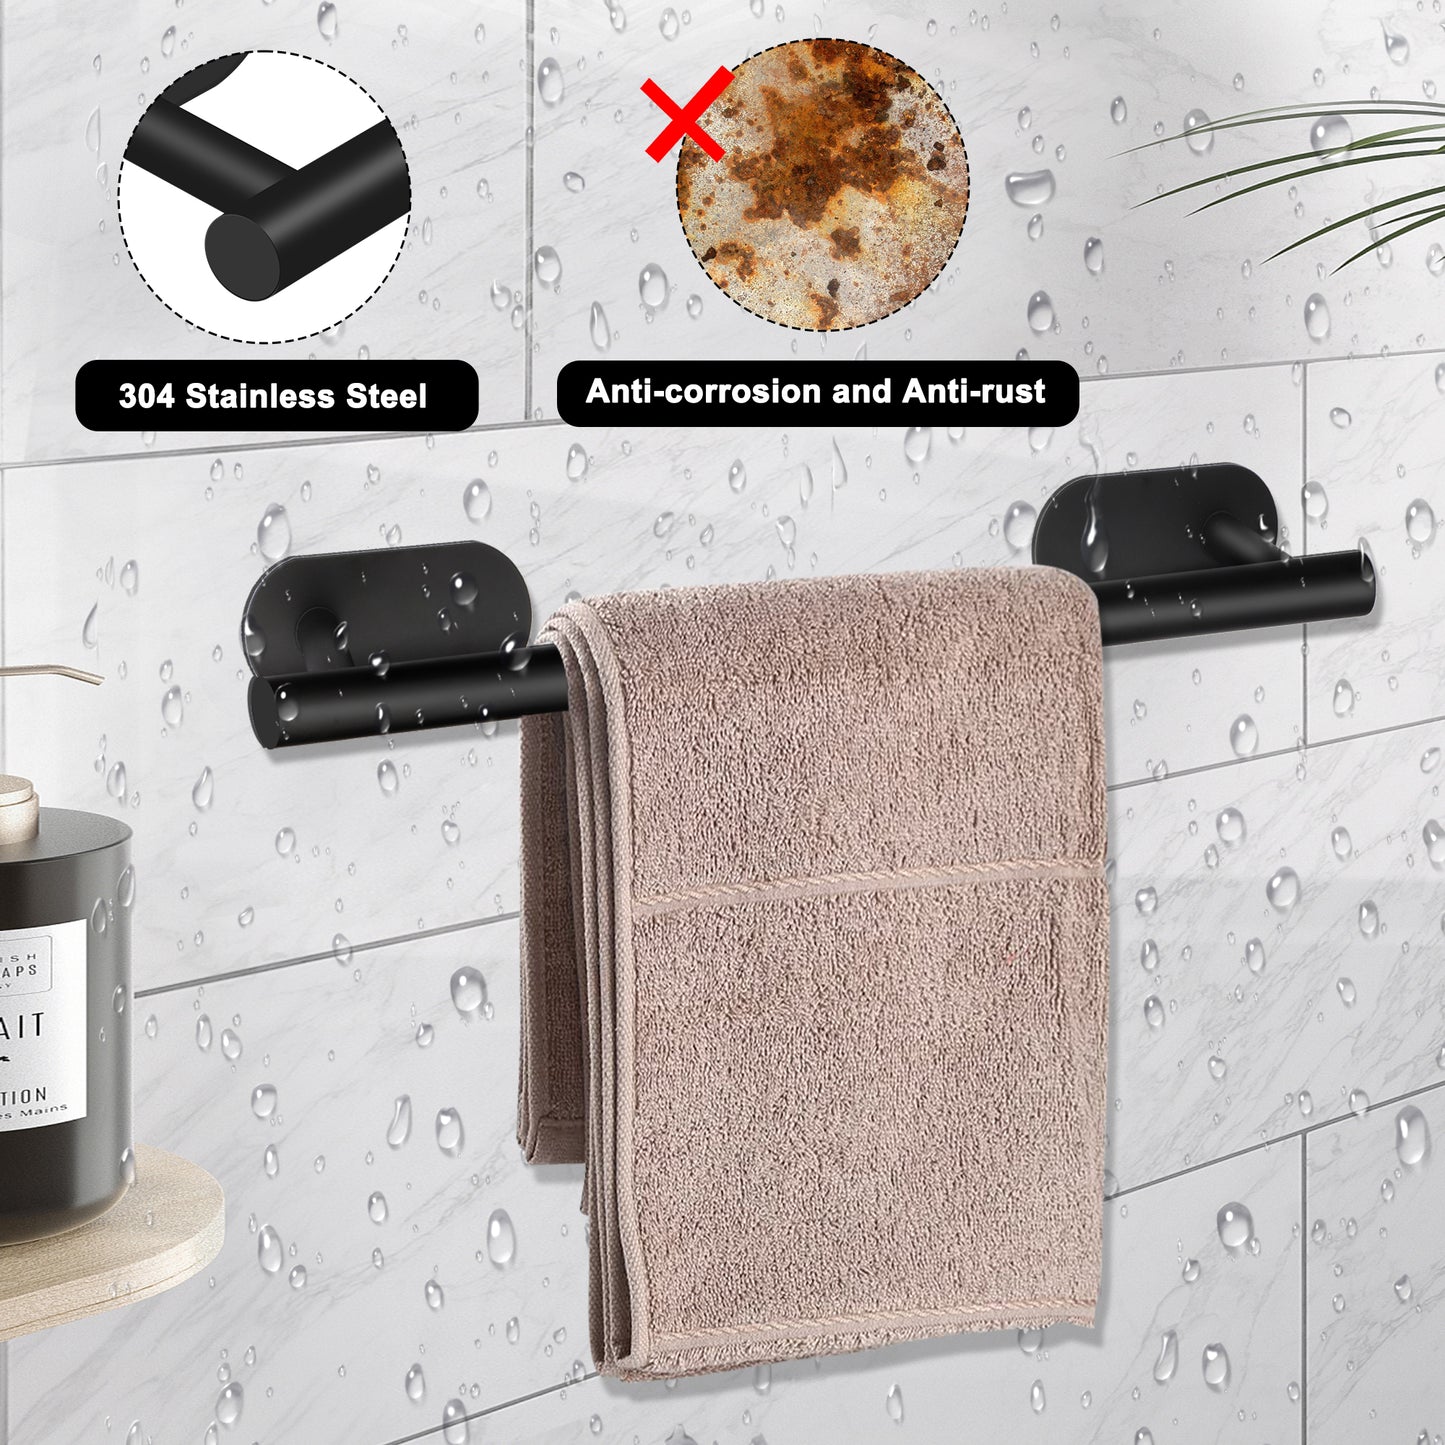 Adhesive Bathroom Shelf Set - Stainless Steel Bathroom Organizer with Towel Bar and Hook,Toilet Paper Holder Towel Bar Rack Bathroom Hardware Set (black)